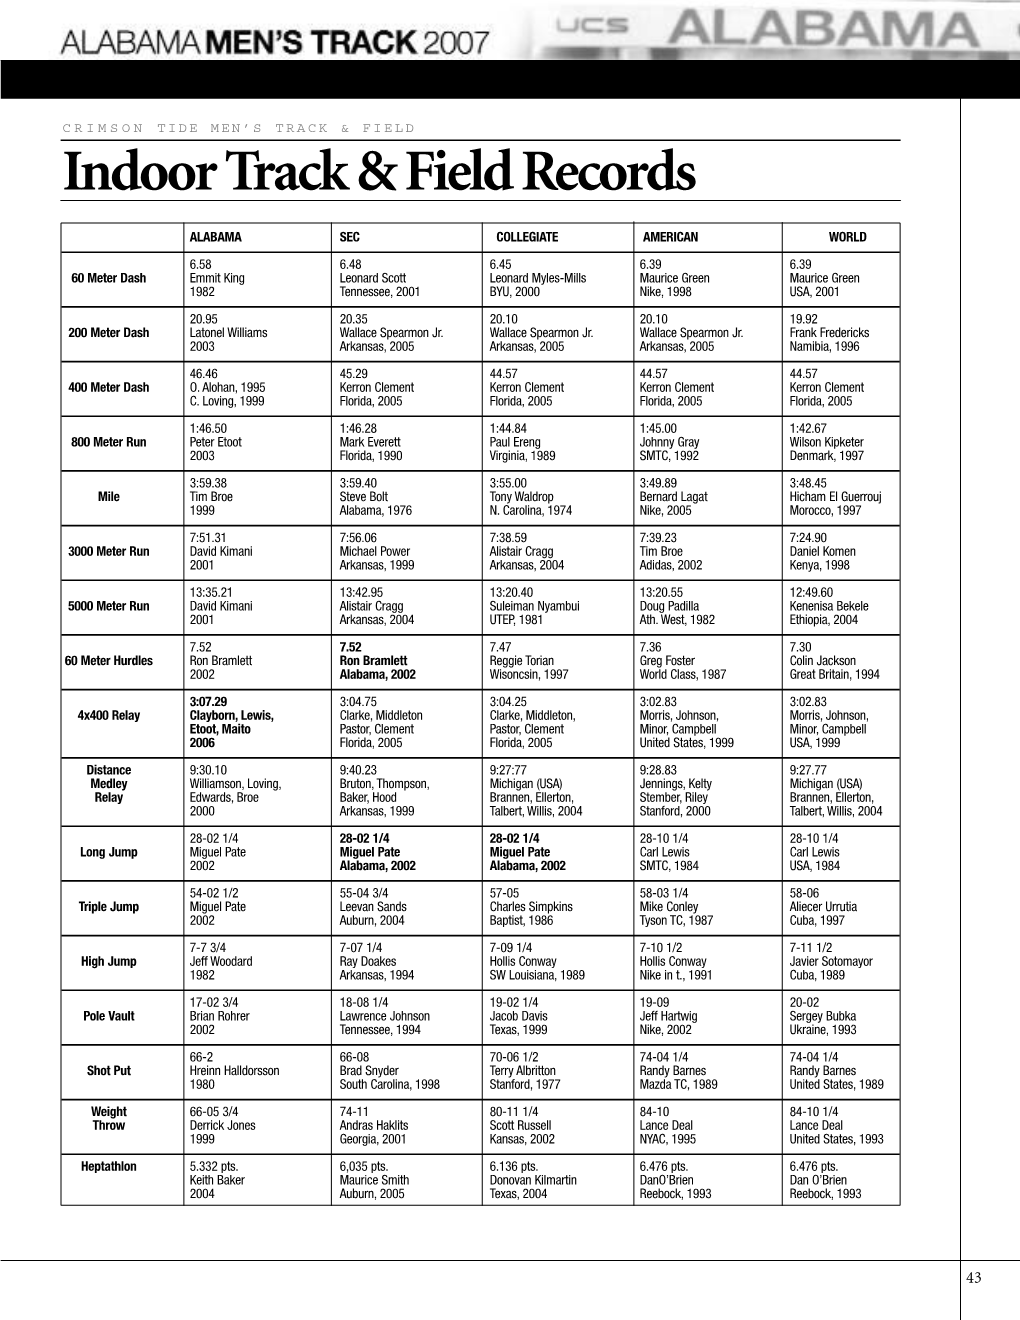 Indoor Track & Field Records